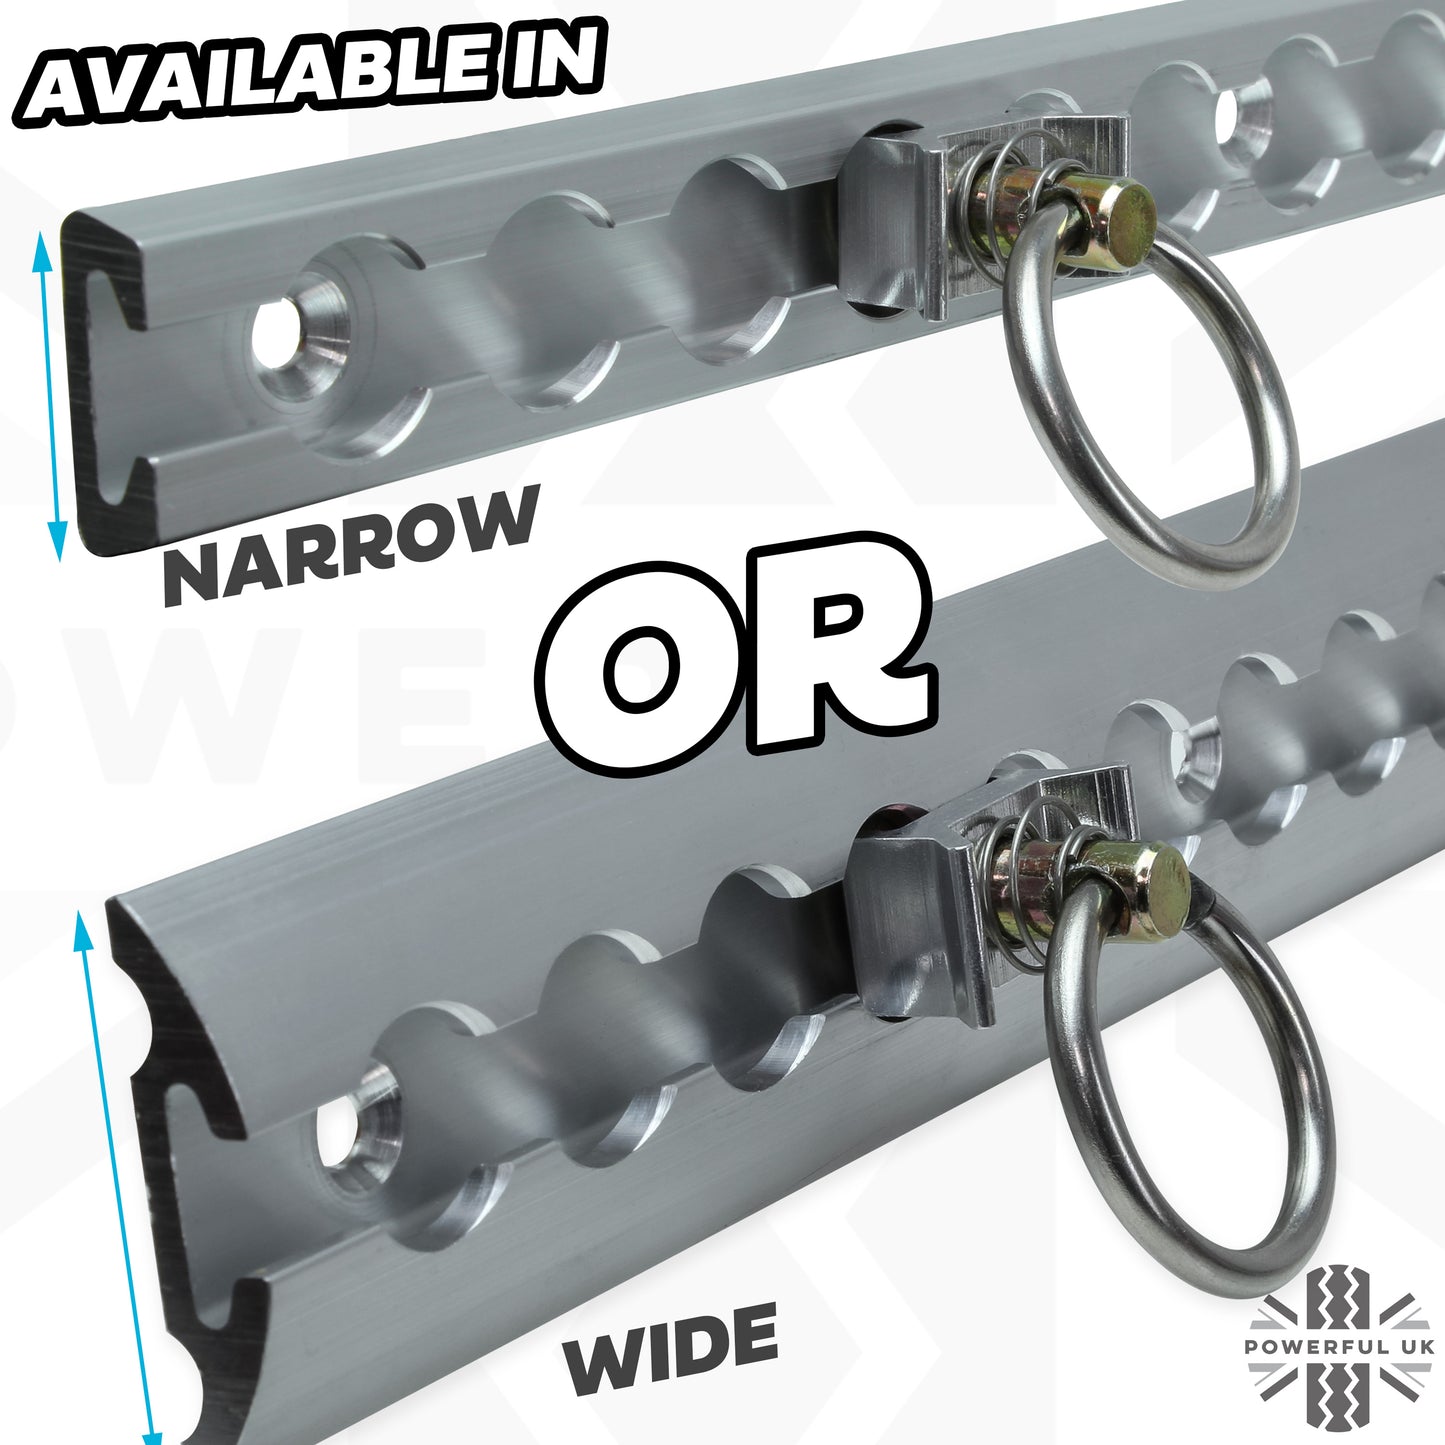 3x Cargo Track/Rails + 4x Tie-down loops - Narrow Type - Black